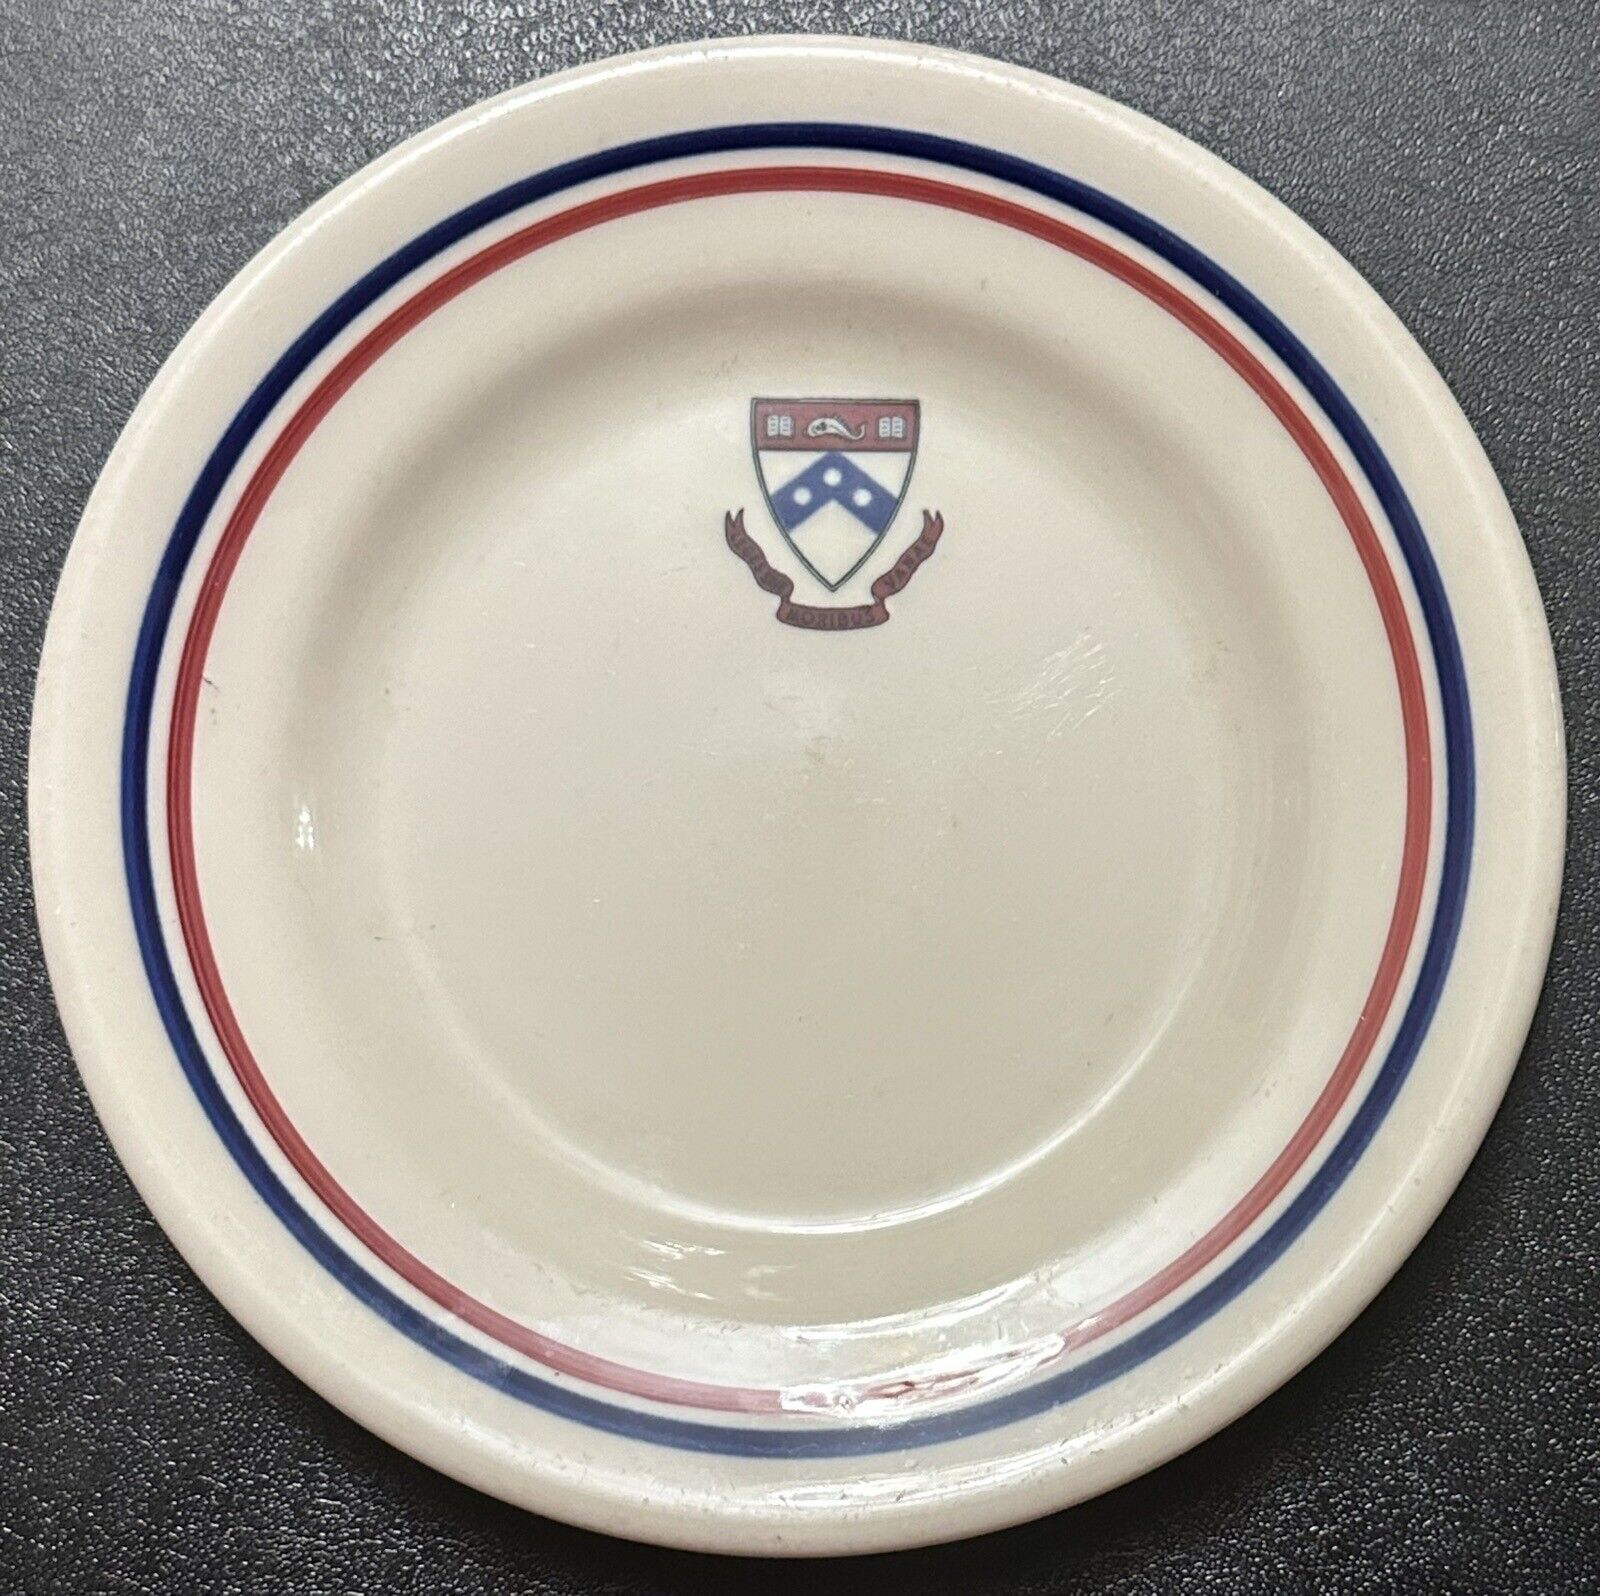 Vintage University of Pennsylvania 6” Bread Plates by Shenango China Dishes